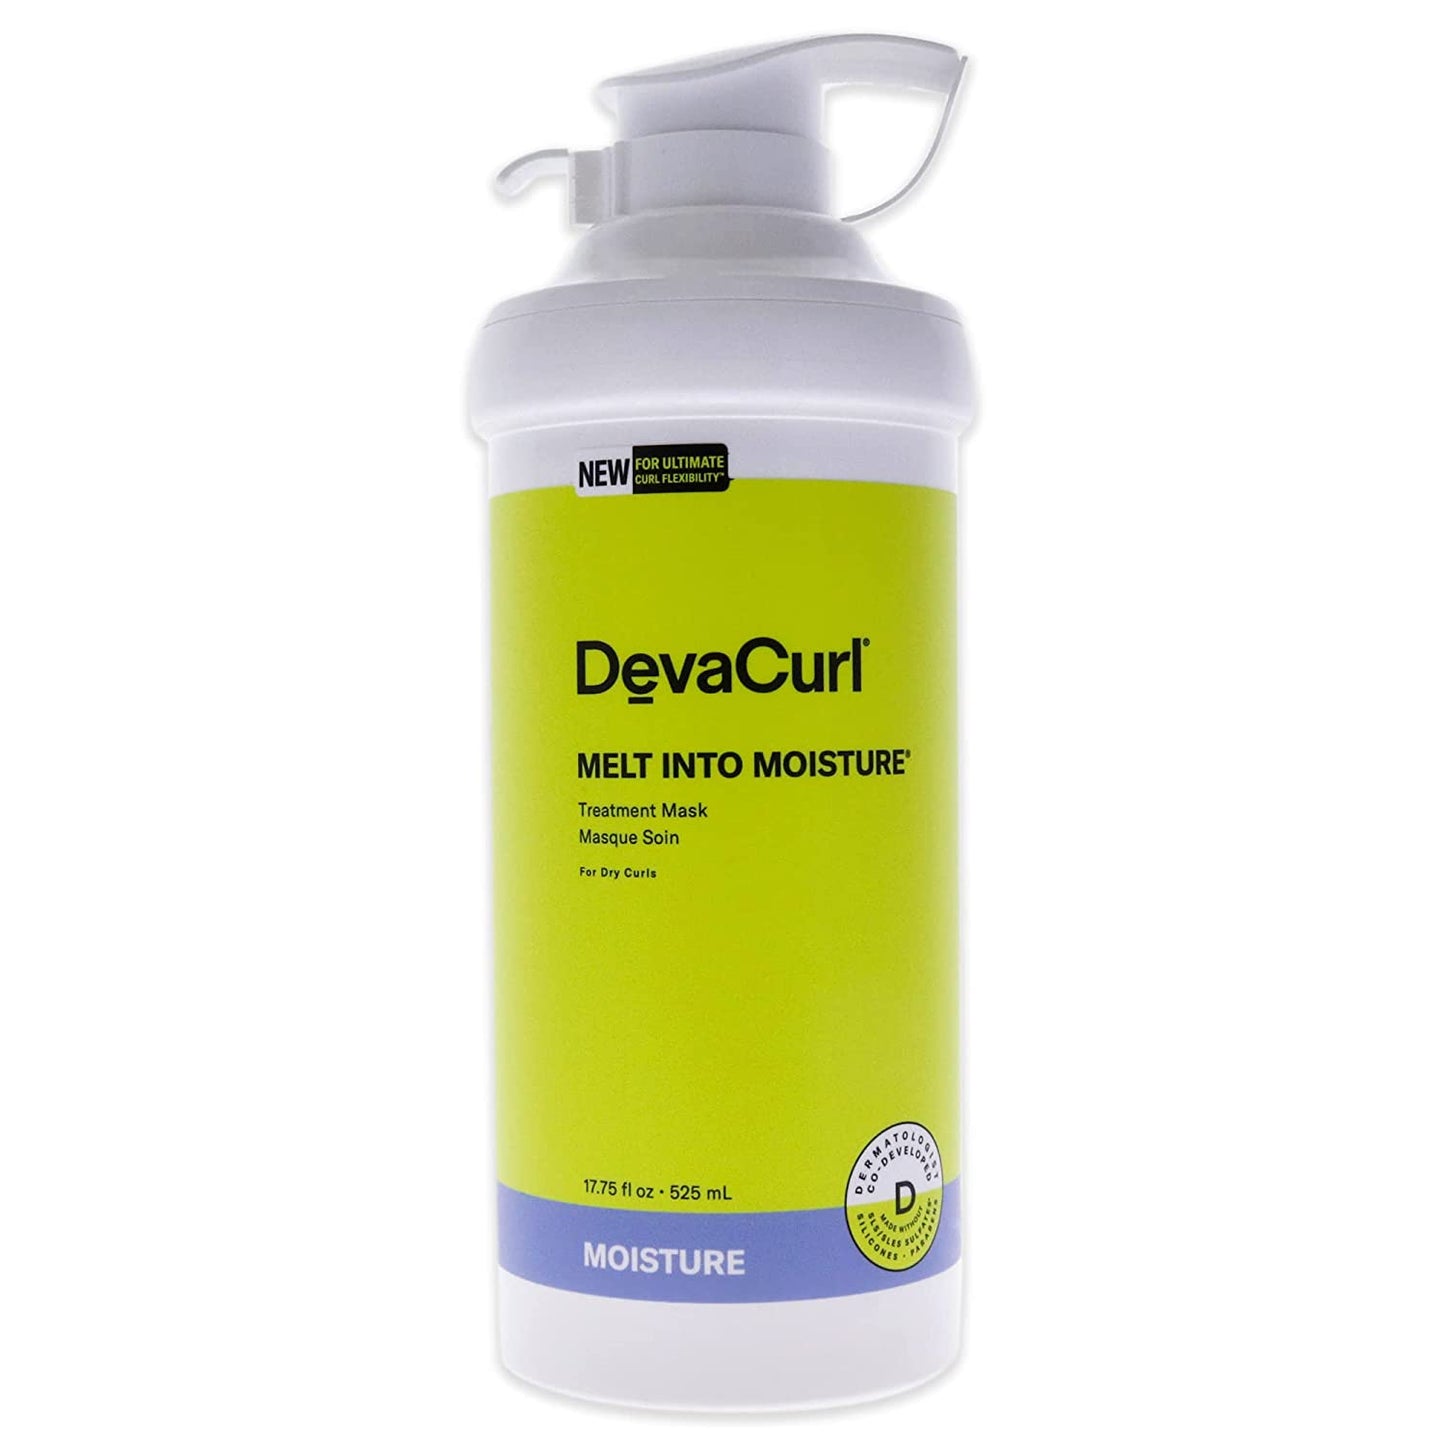 DevaCurl Melt Into Moisture Treatment Mask, Green Oasis, 17.75 fl. oz